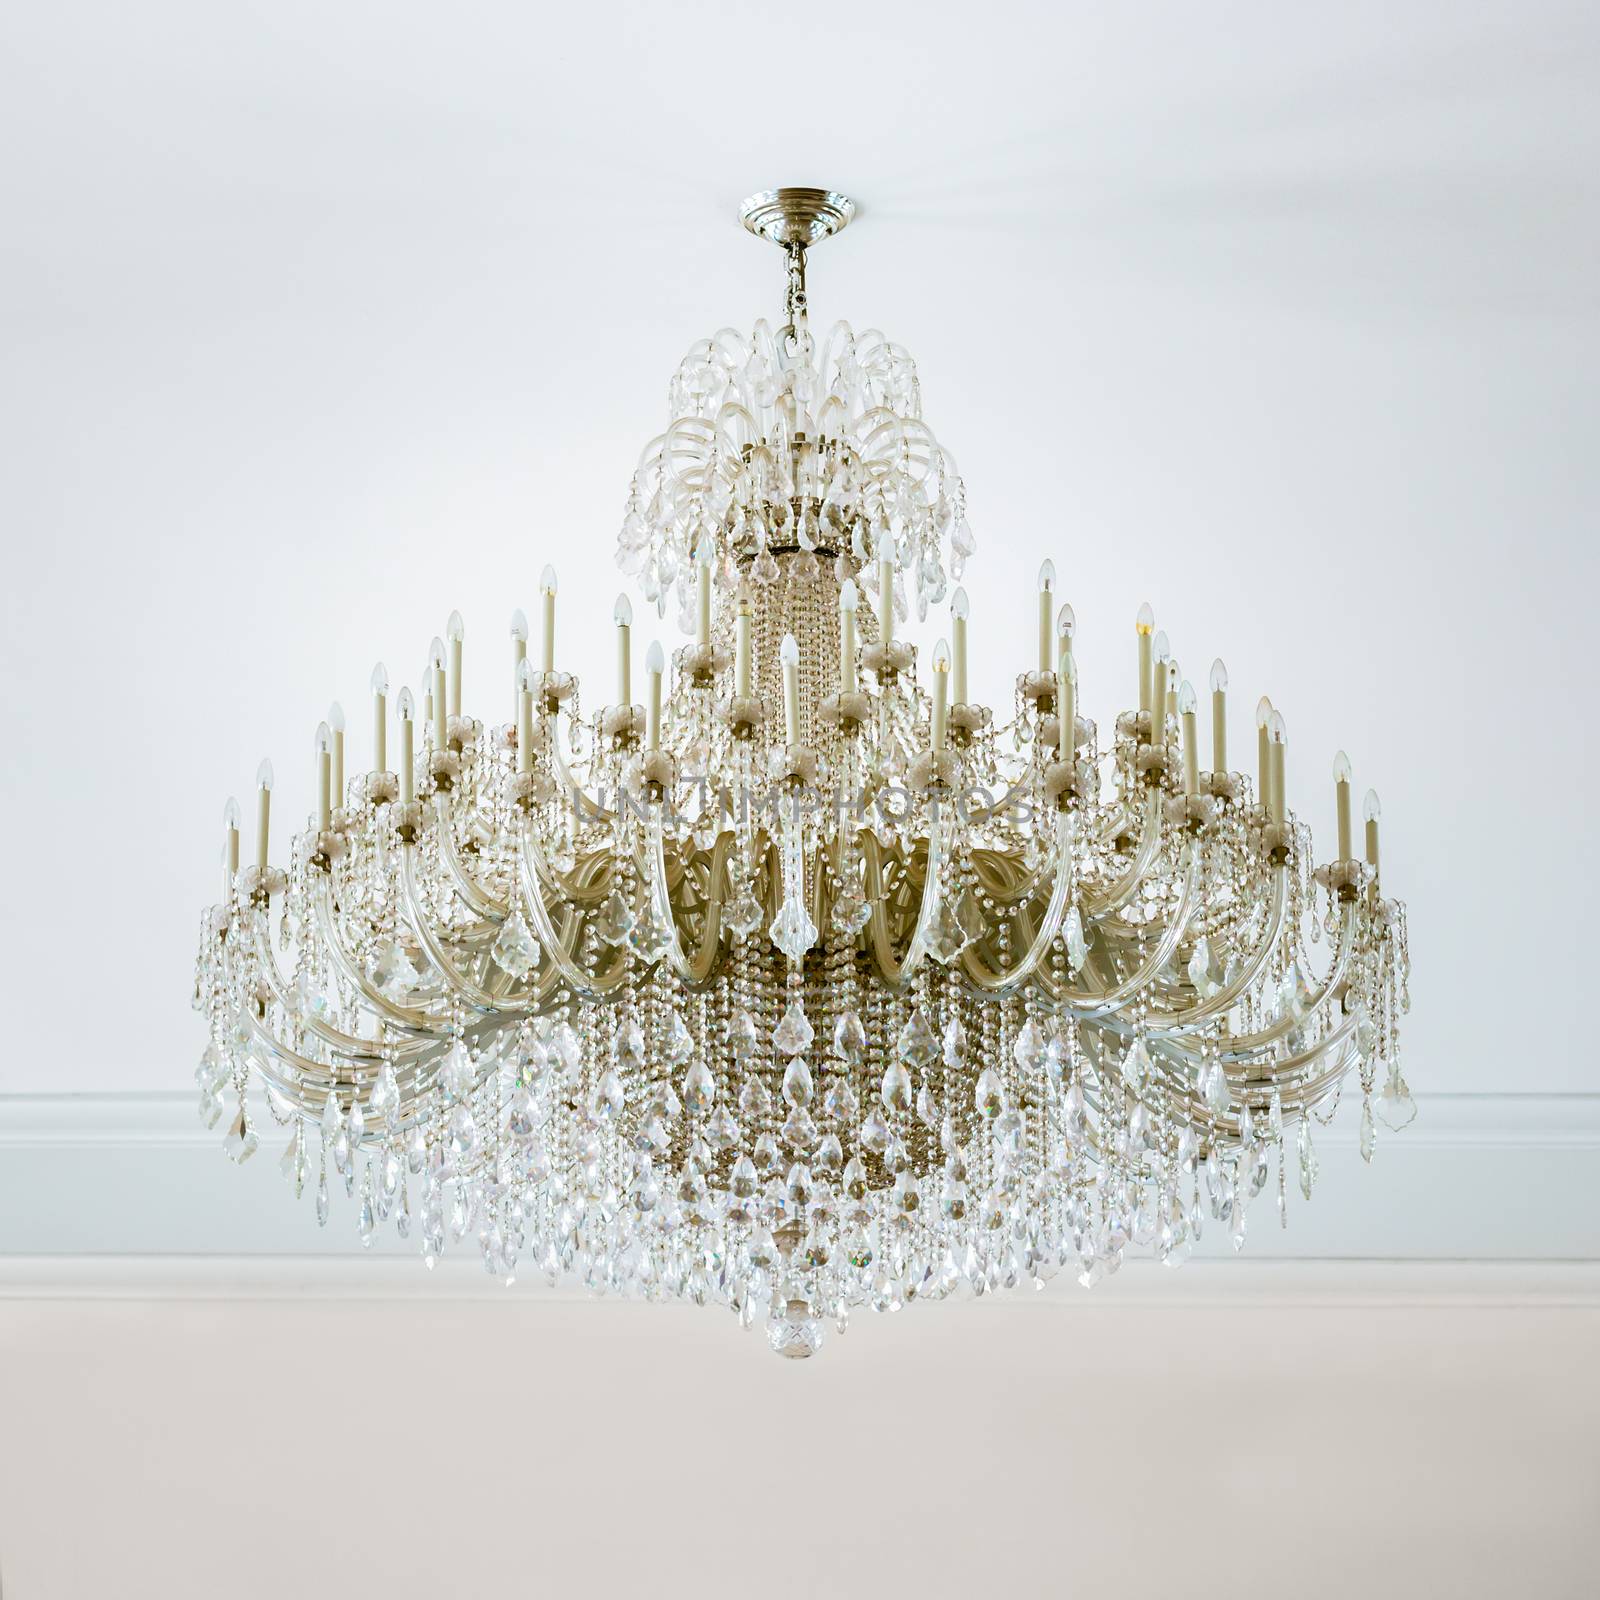 Luxury Crystal chandelier in a room